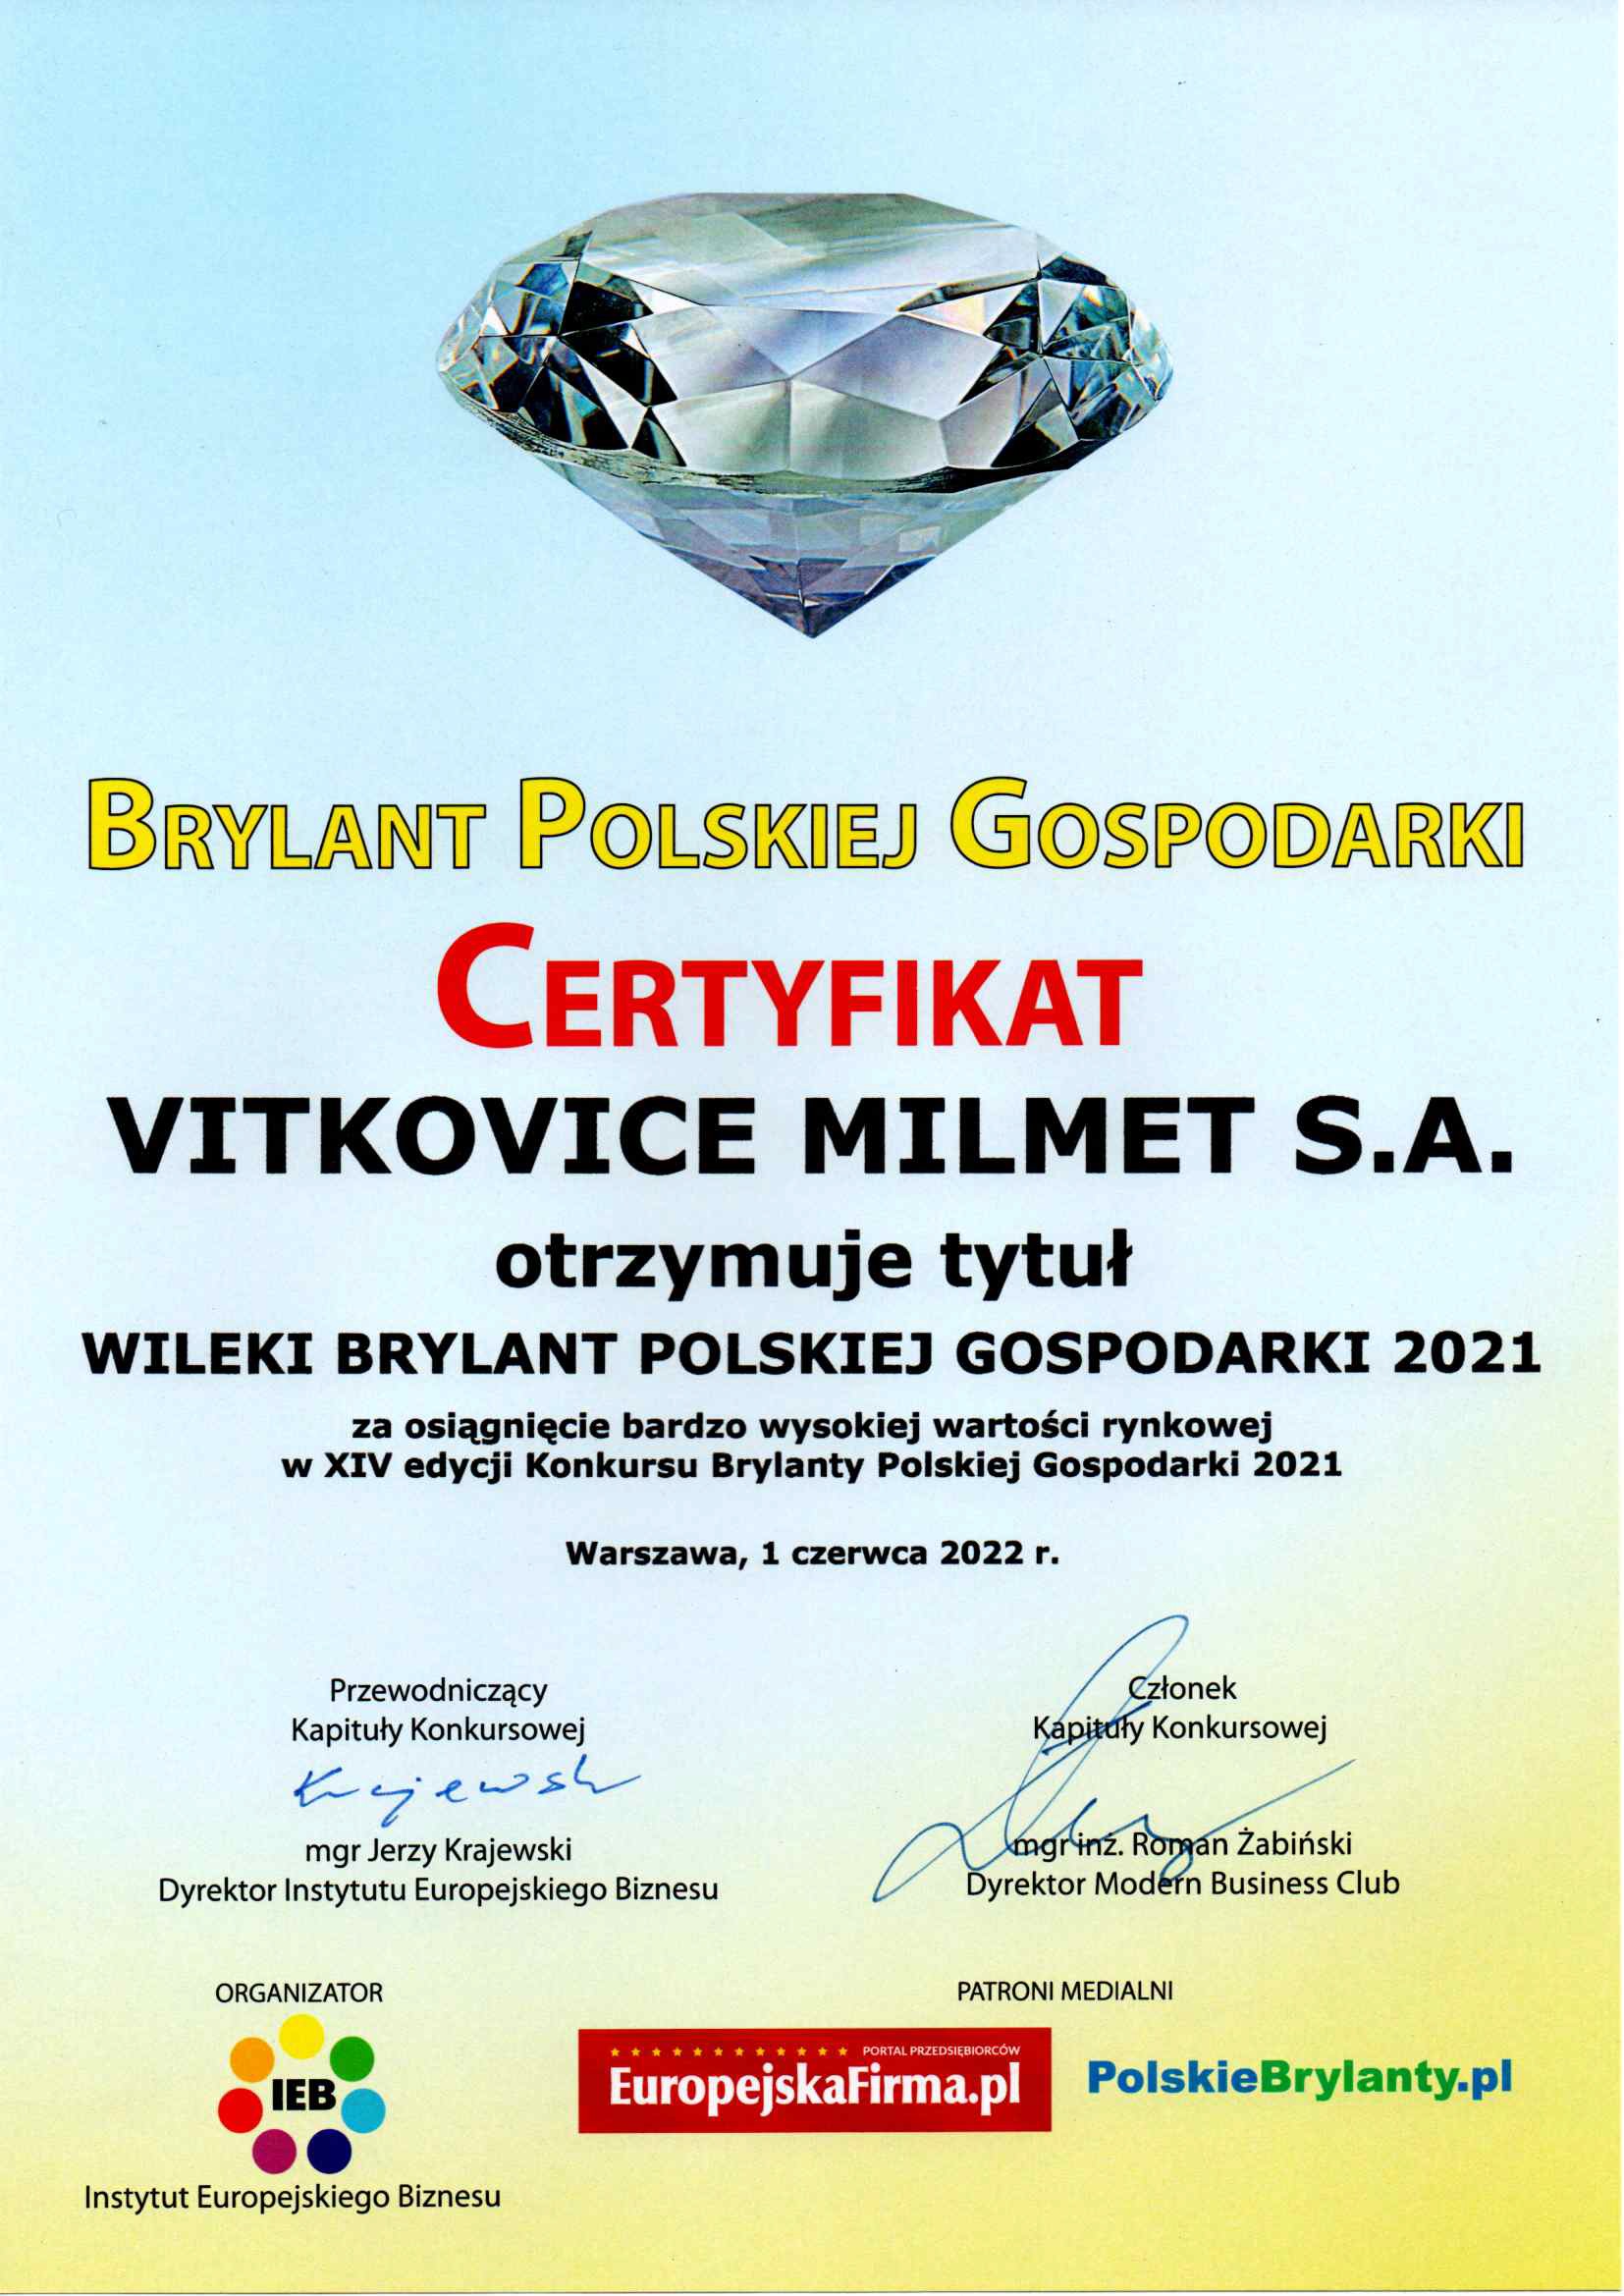 BRYLANT POLSKIEJ GOSPODARKI DLA VITKOVICE MILMET S.A.